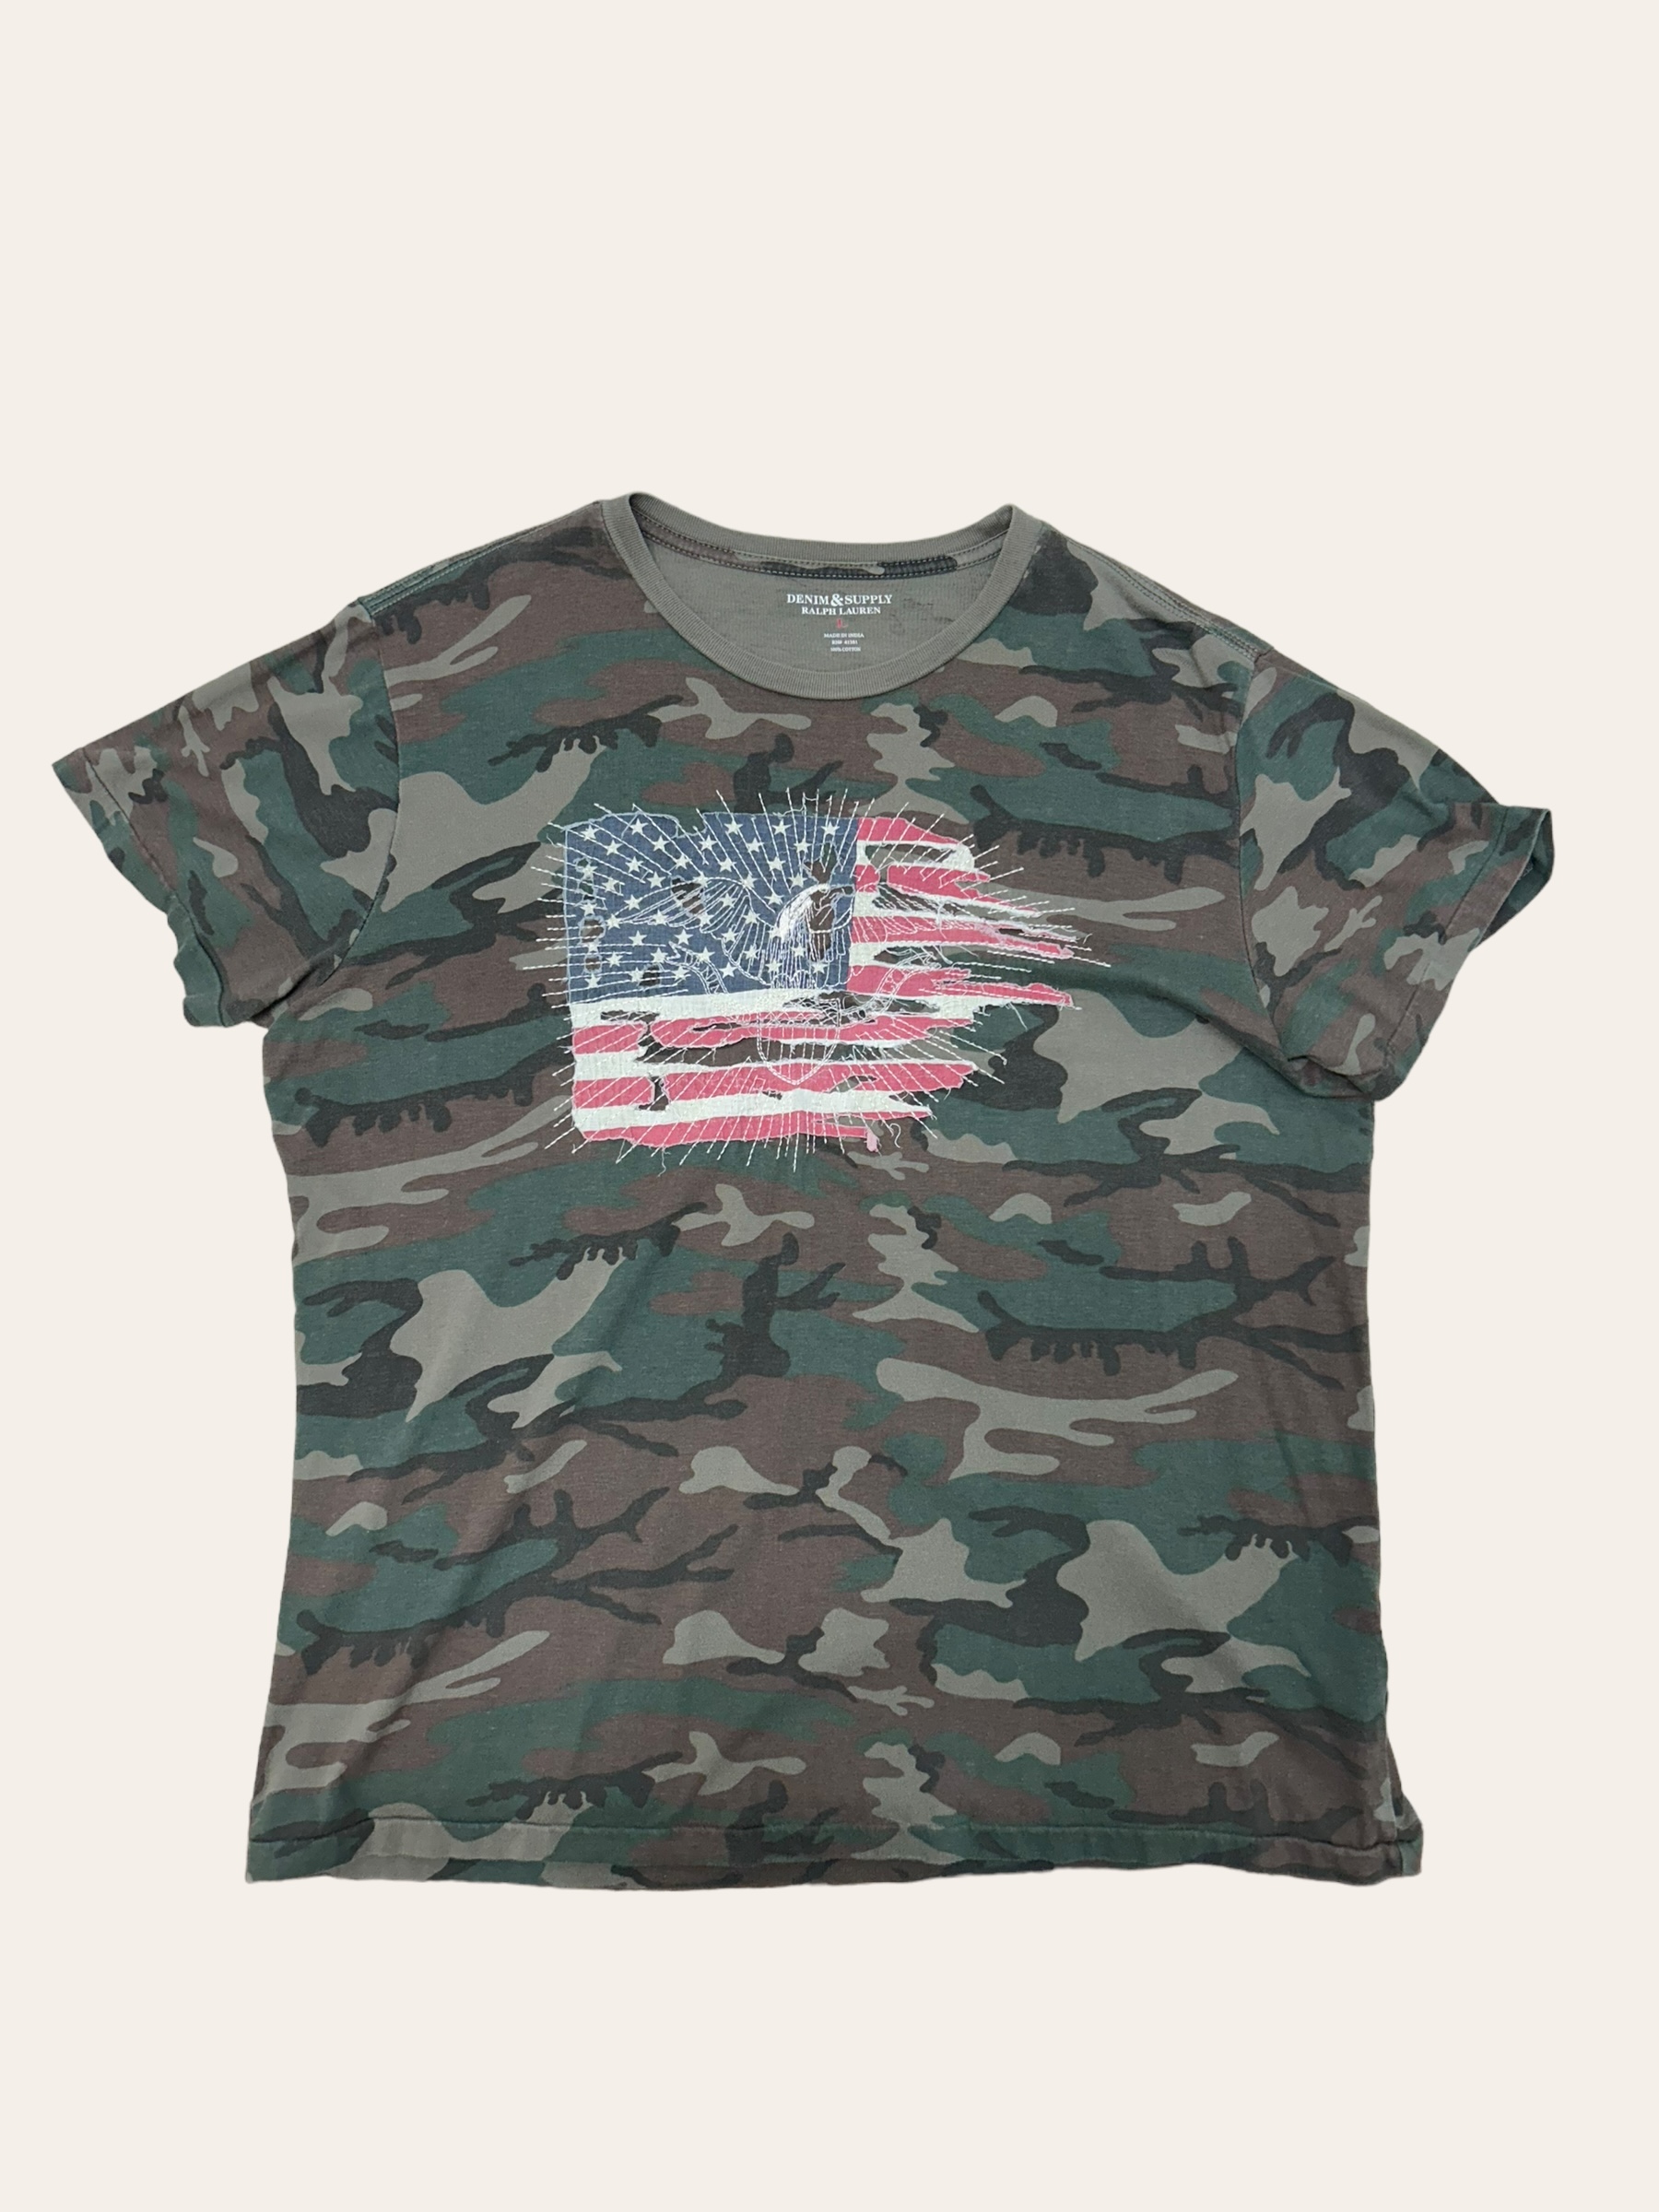 Denim &amp; Supply camouflage USA flag T-shirt L